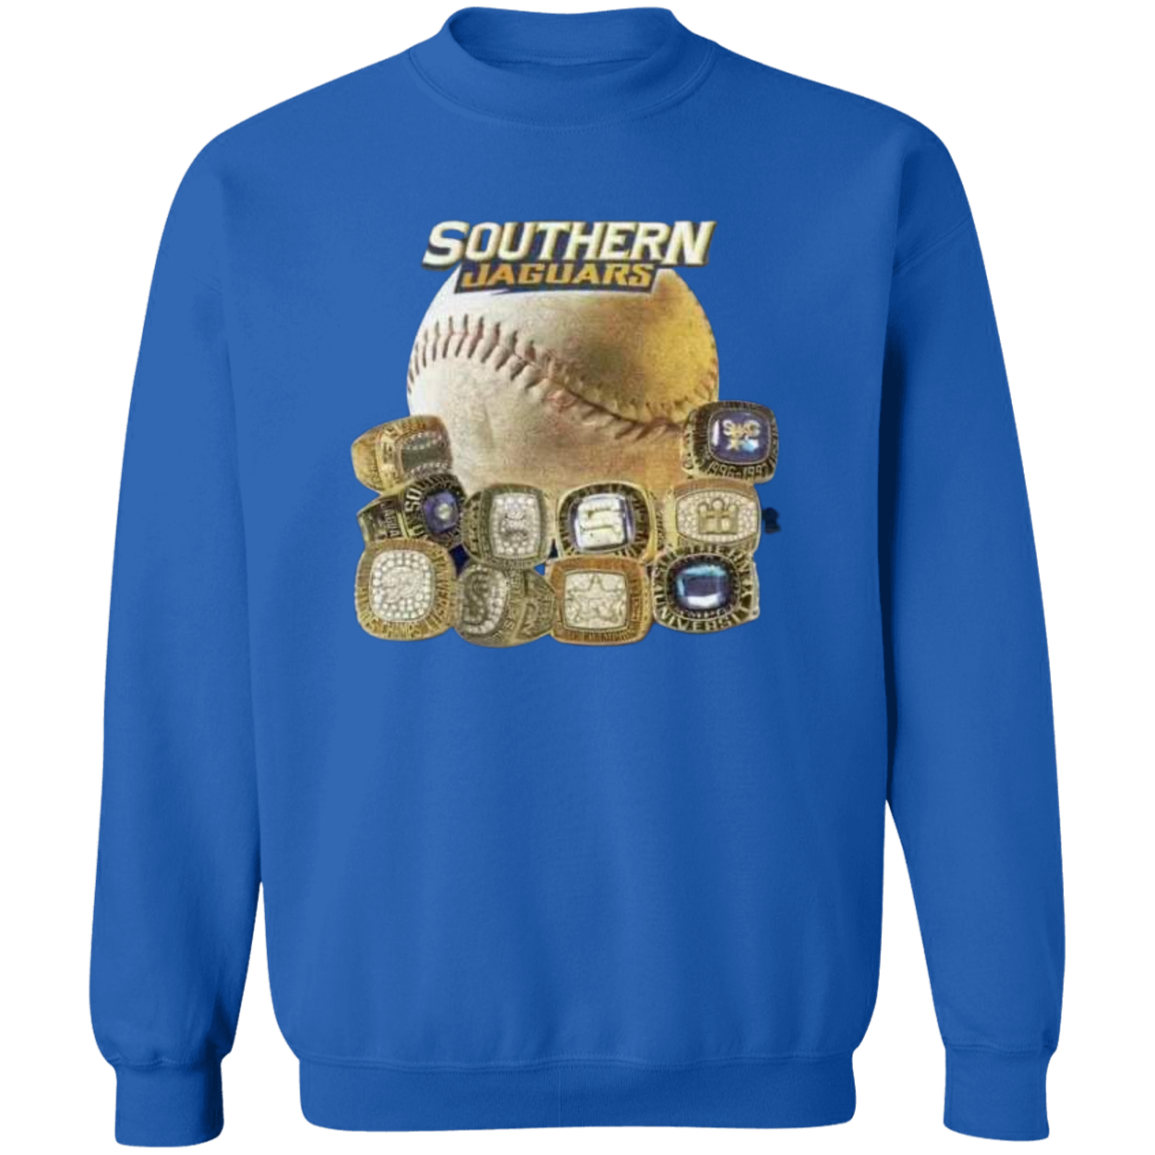 SU Baseball SWAC (Southern Wins Another Championship)  Rings Z65x Pullover Crewneck Sweatshirt 8 oz (Closeout)